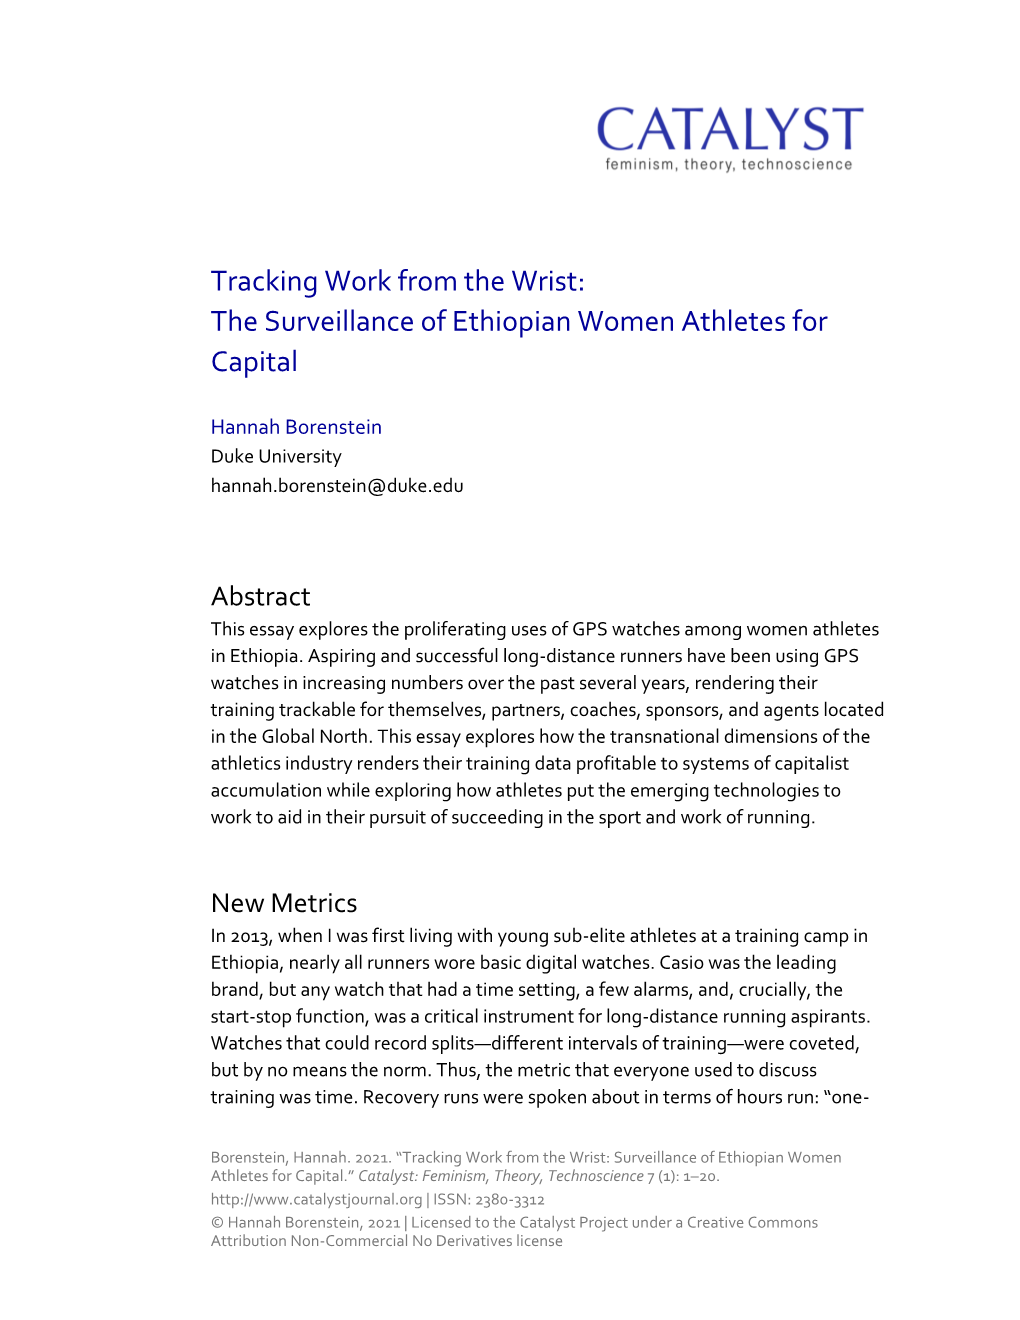 The Surveillance of Ethiopian Women Athletes for Capital